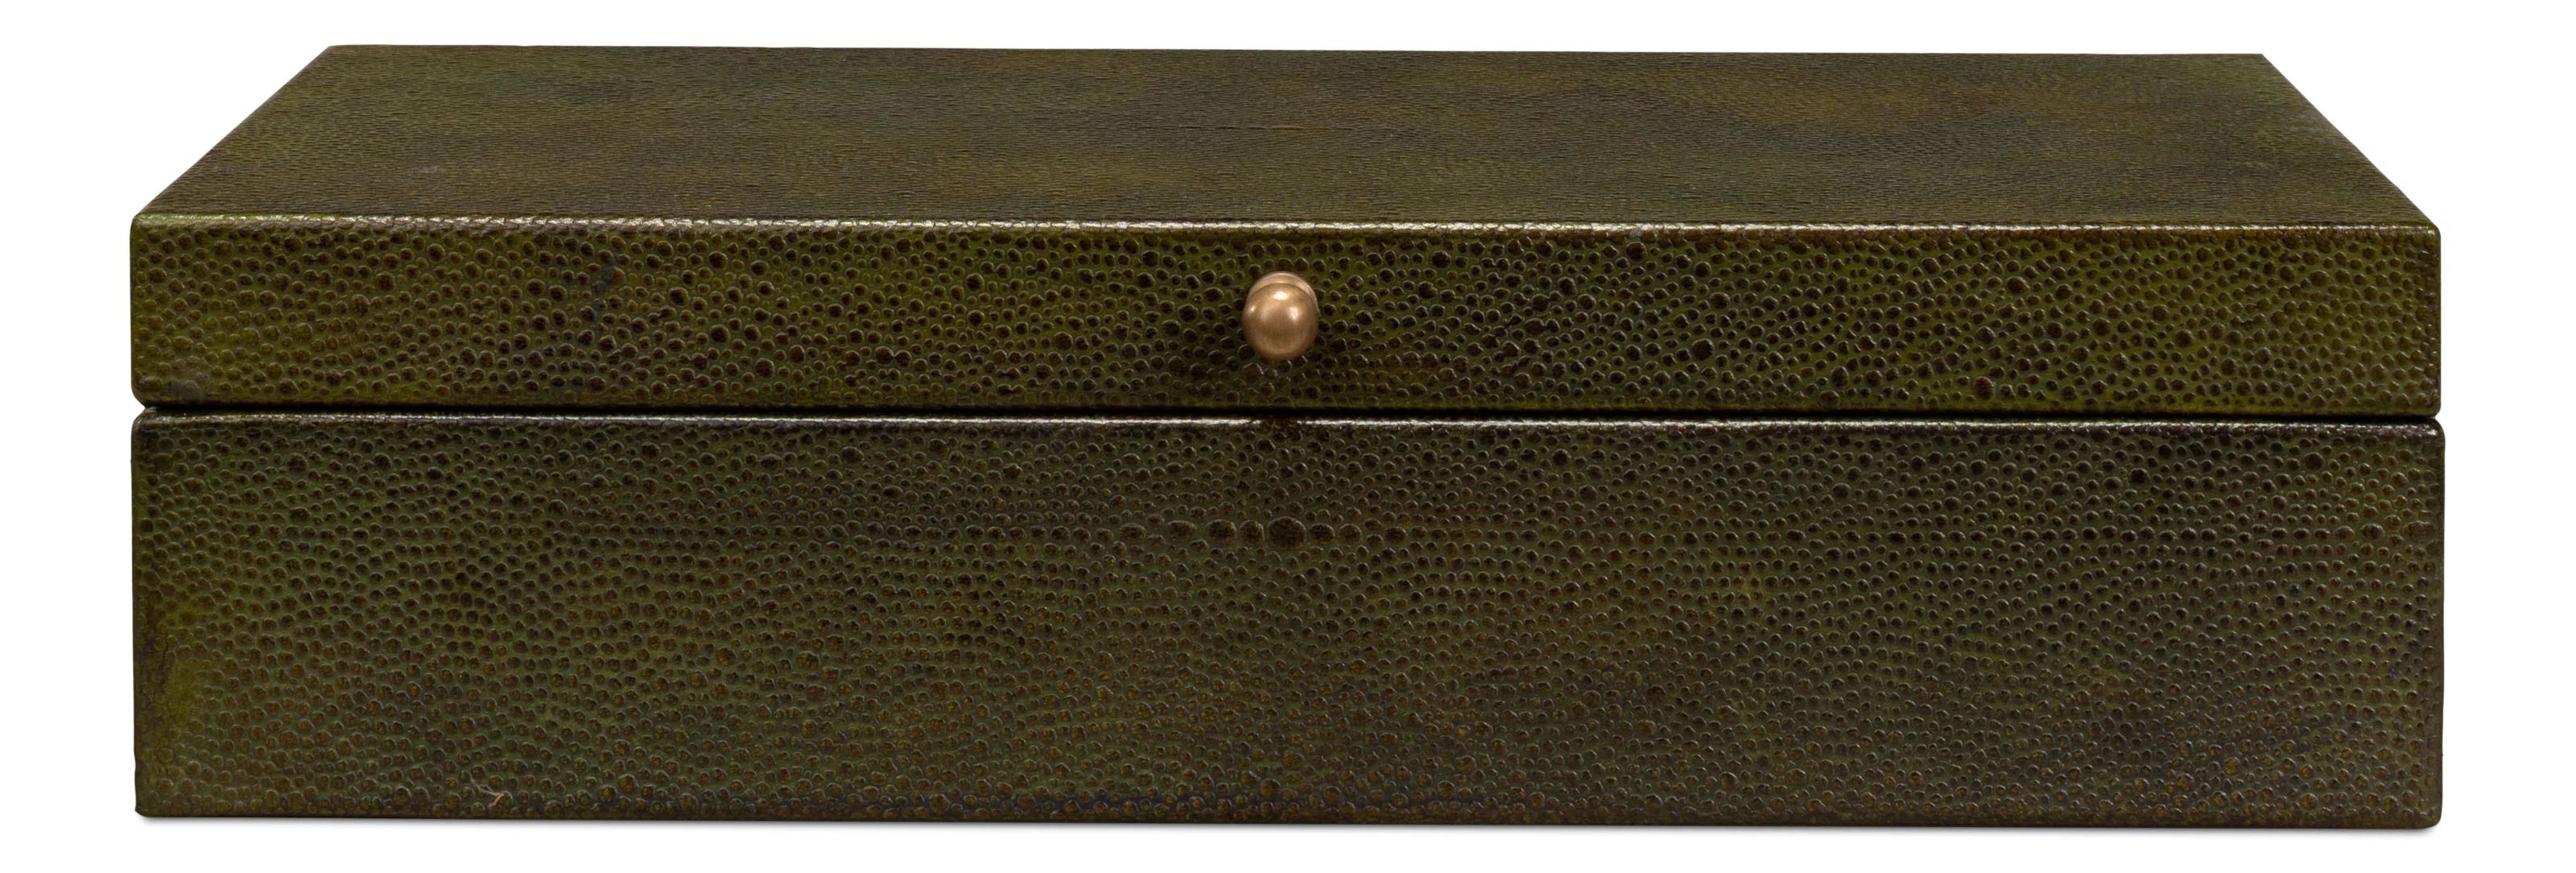 Gatsburg Decorative Box | Wayfair Professional